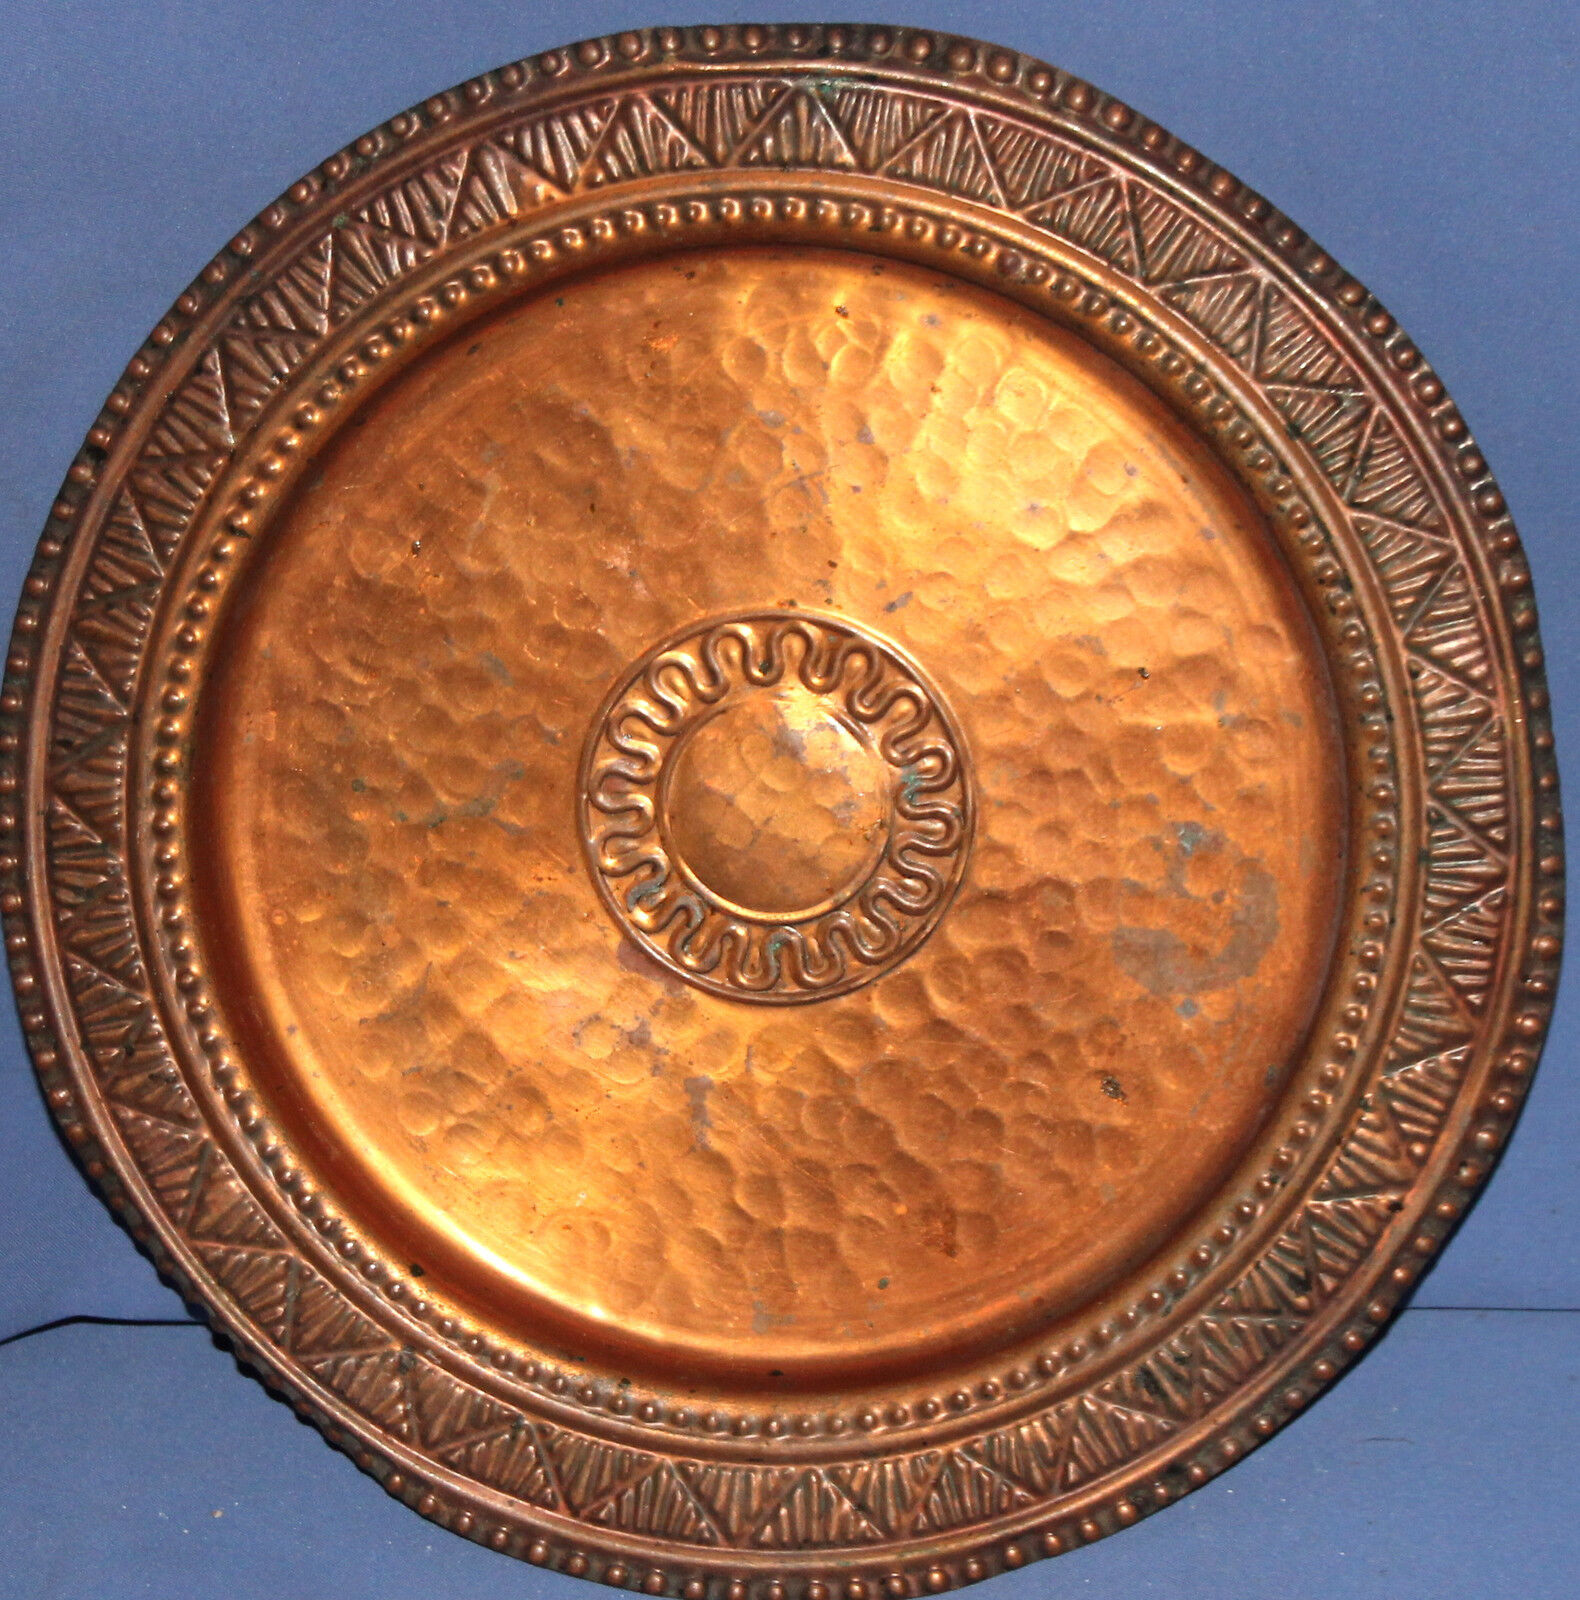 Vintage copper ornate decorative plate